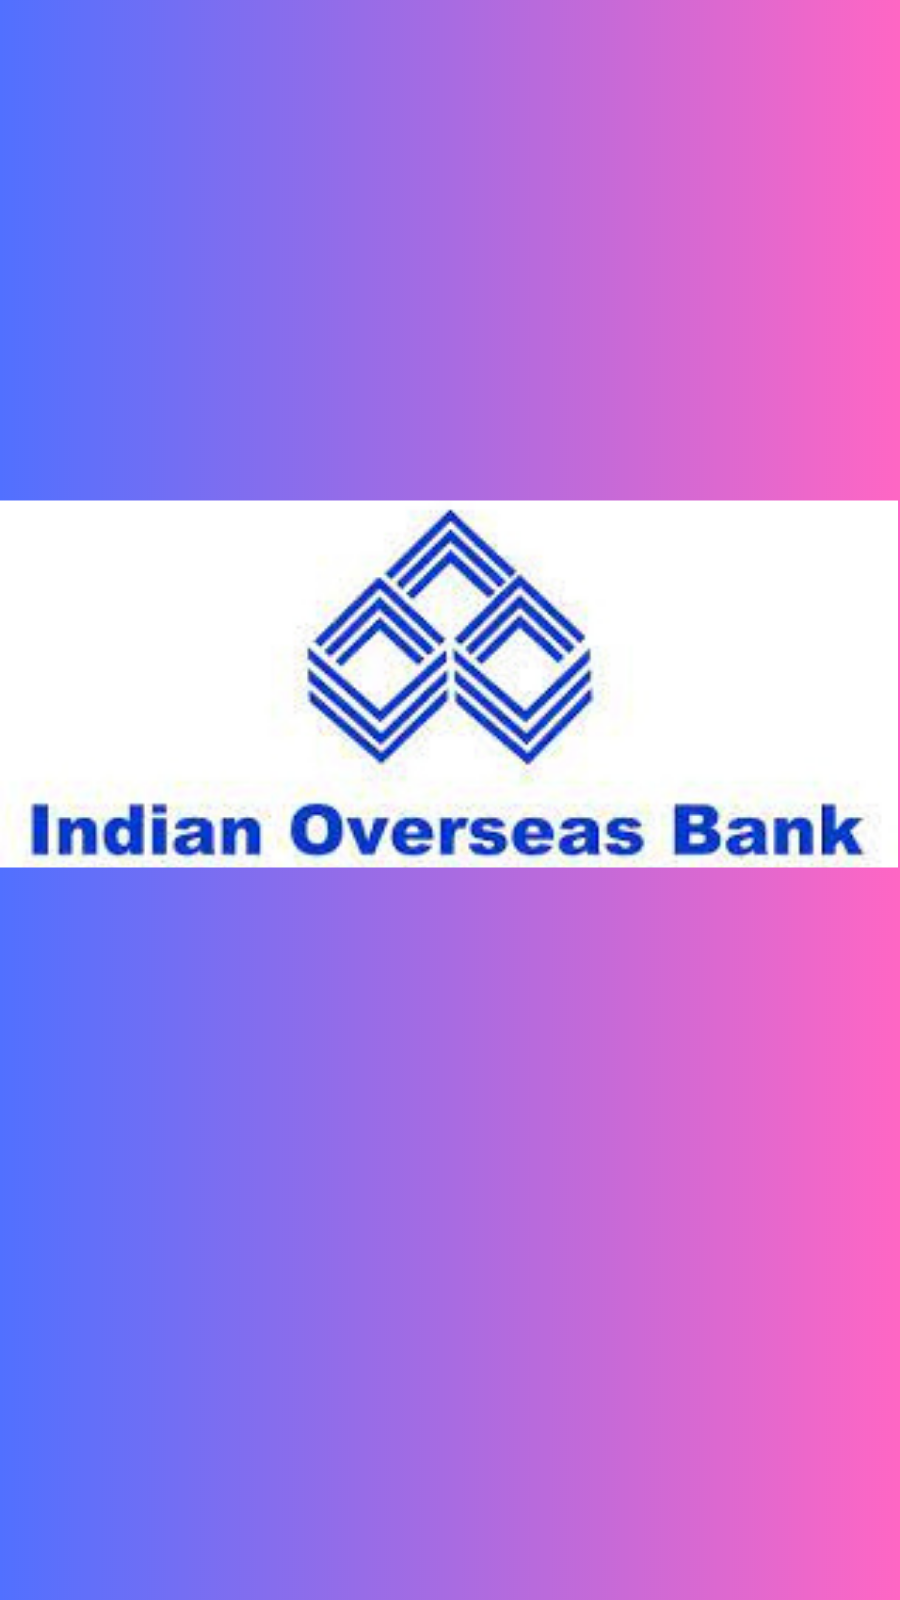 INDIAN OVERSEAS BANK on LinkedIn: #financialresults #iob  #indianoverseasbank #dfs #rbi